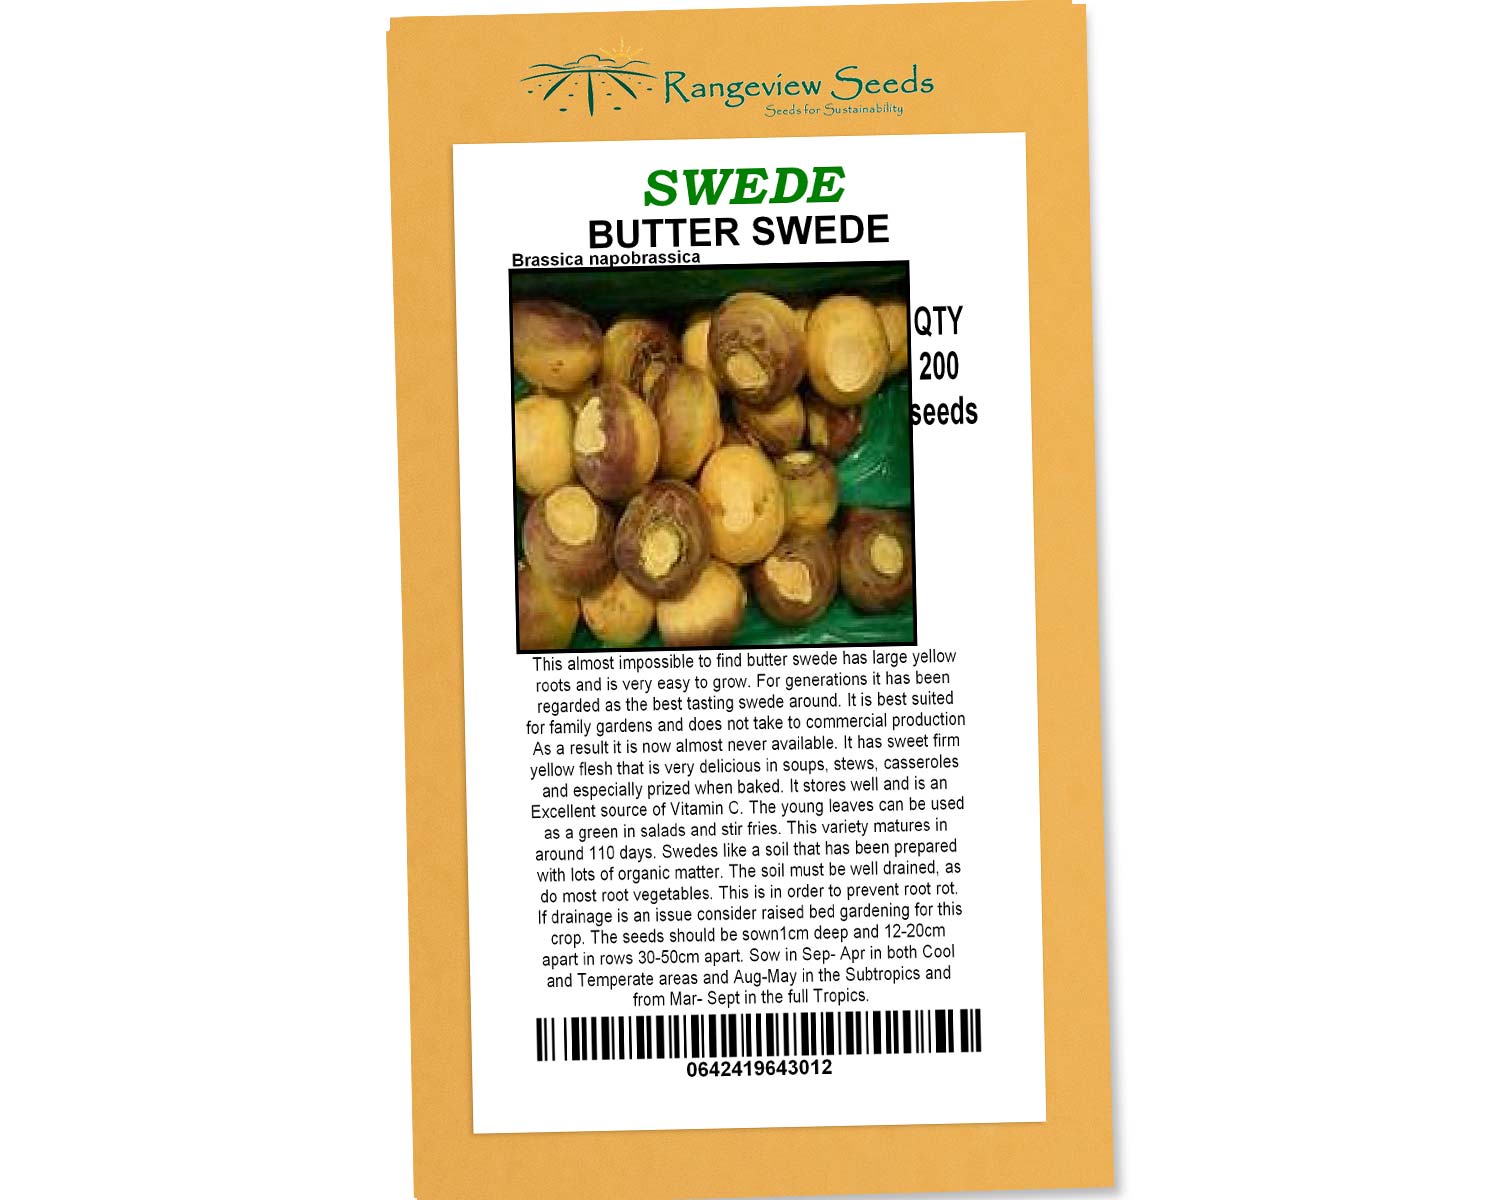 Swede Butter Swede - Rangeview Seeds